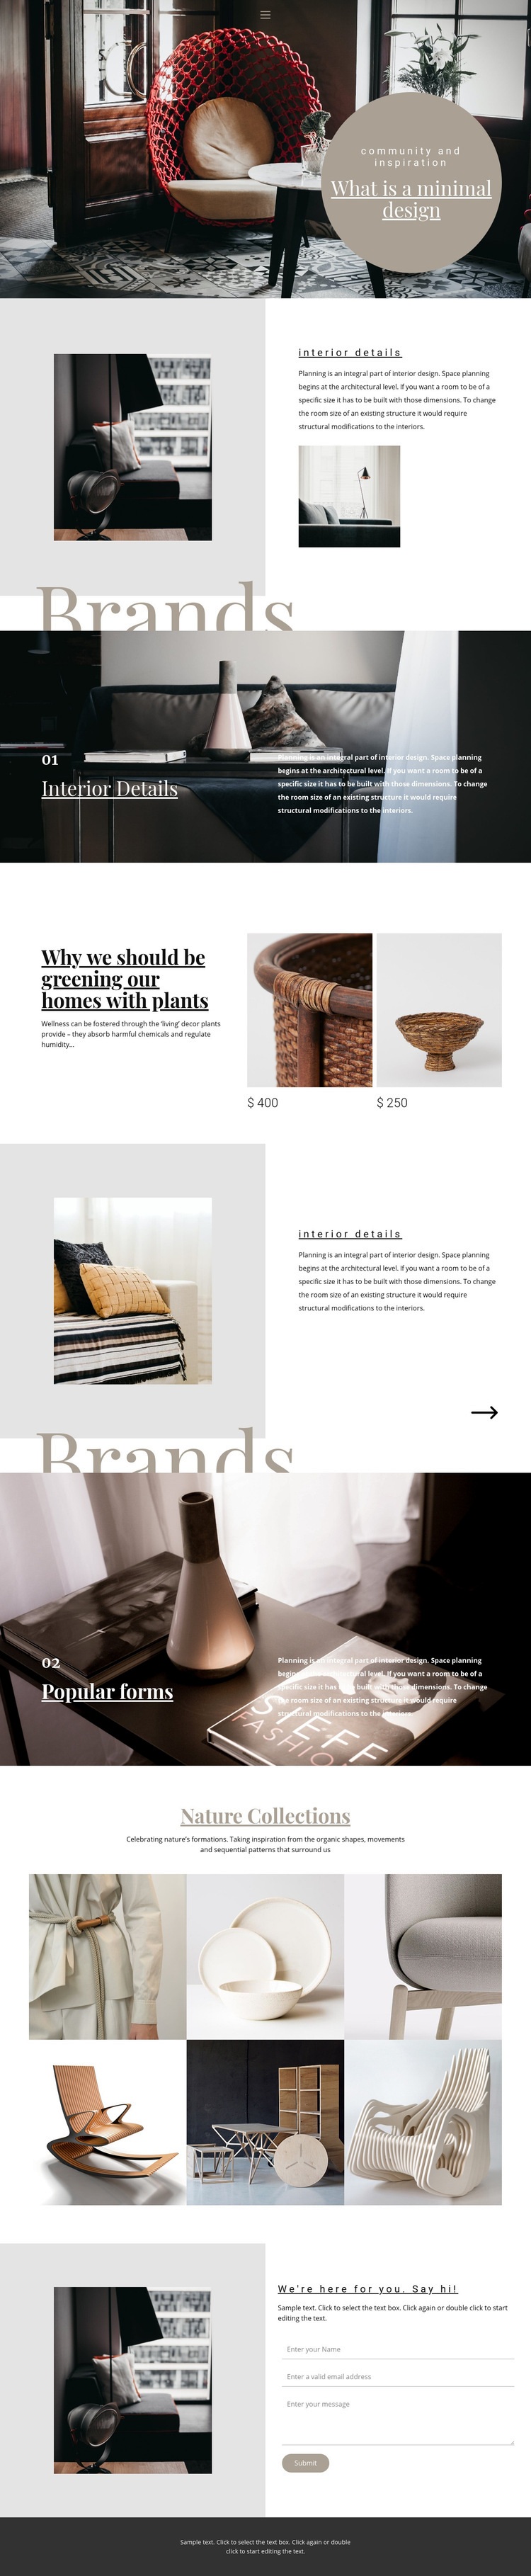 Interior brands Web Page Design